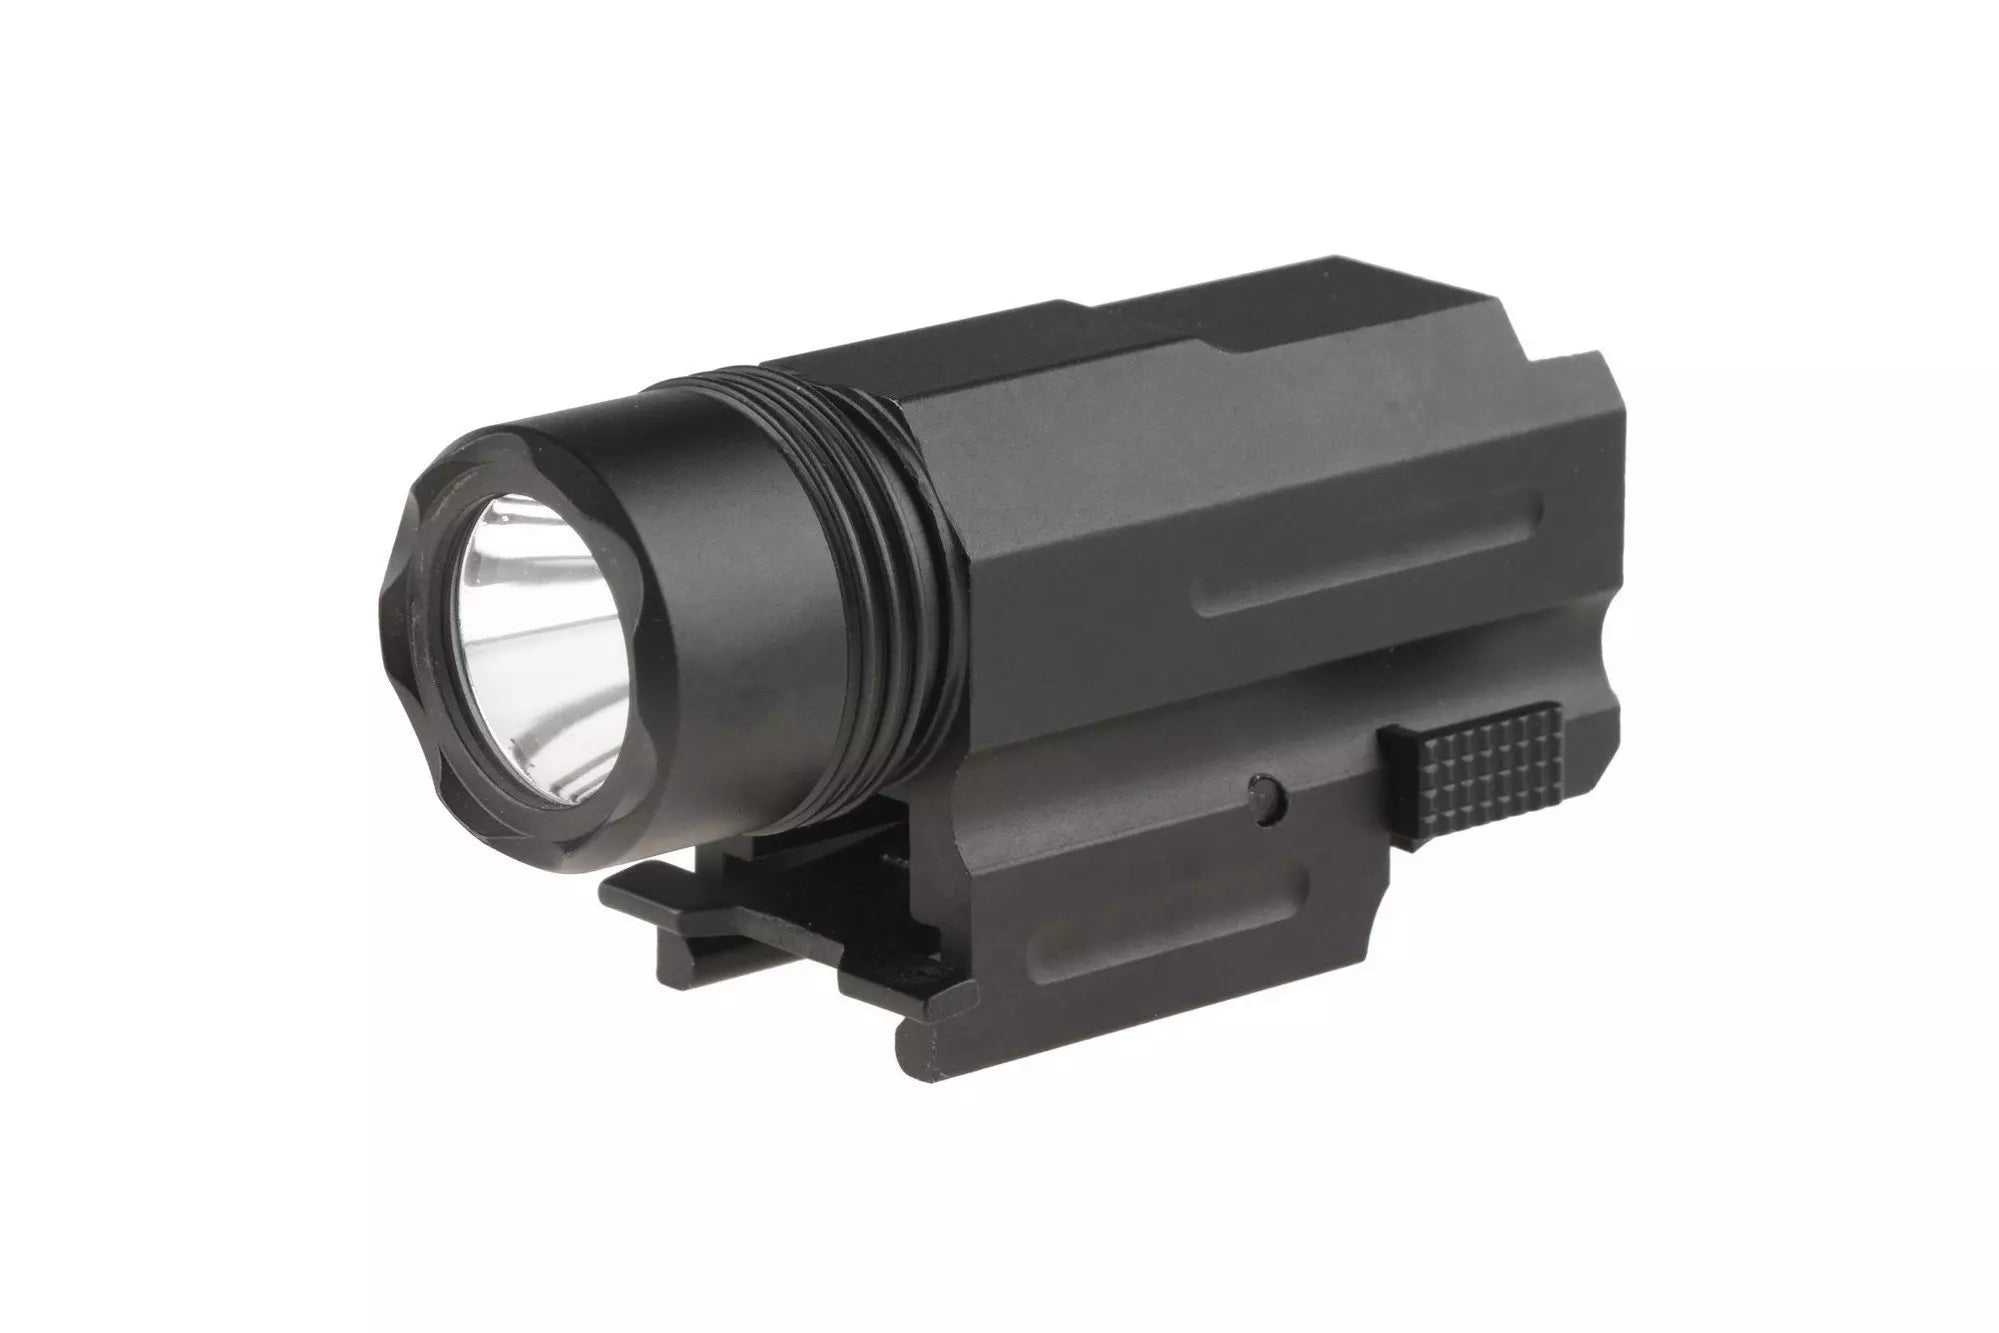 ZHJ-004 tactical flashlight